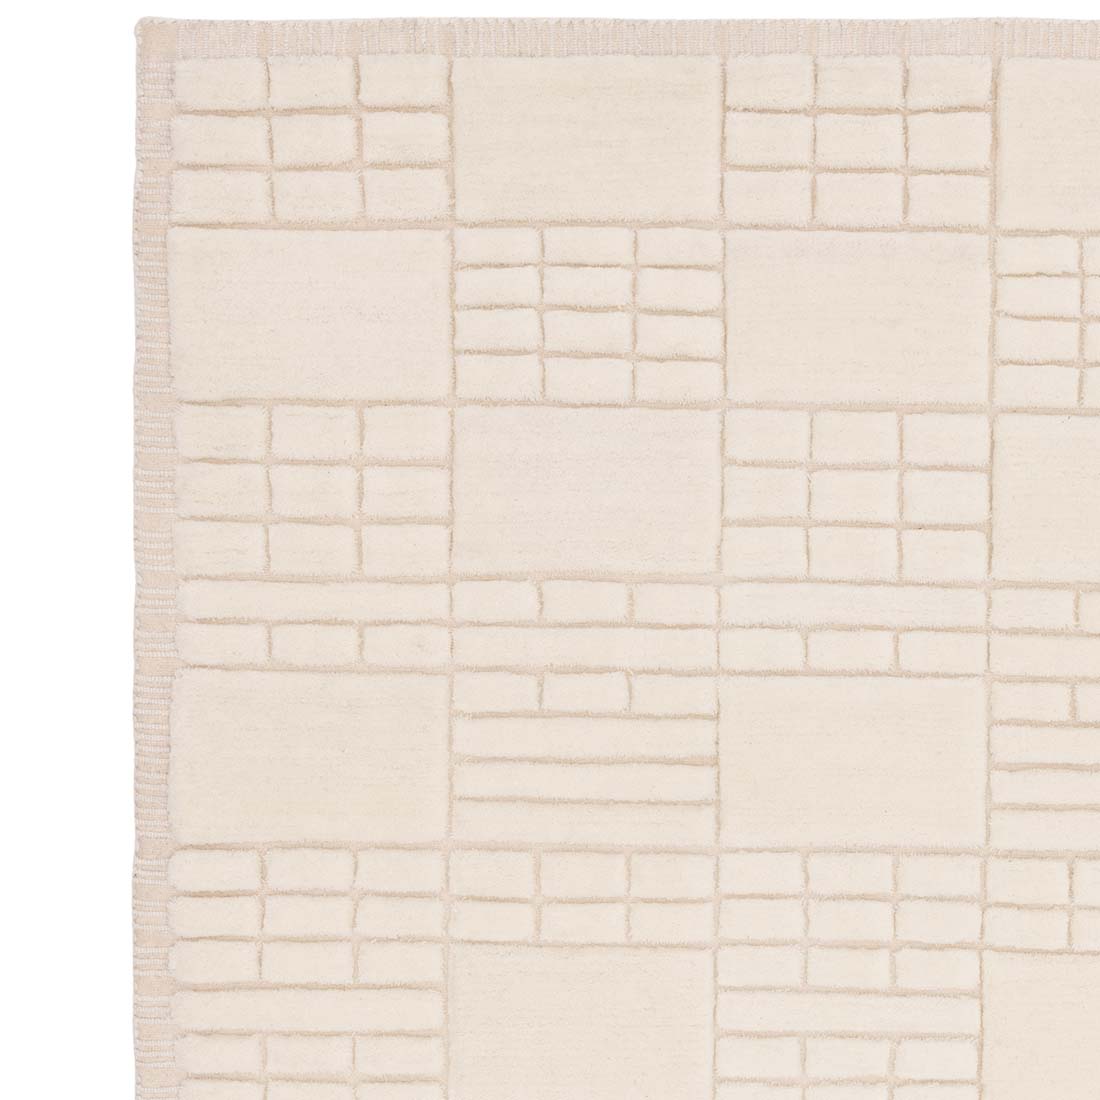 cream wool rug with subtle geometric pattern